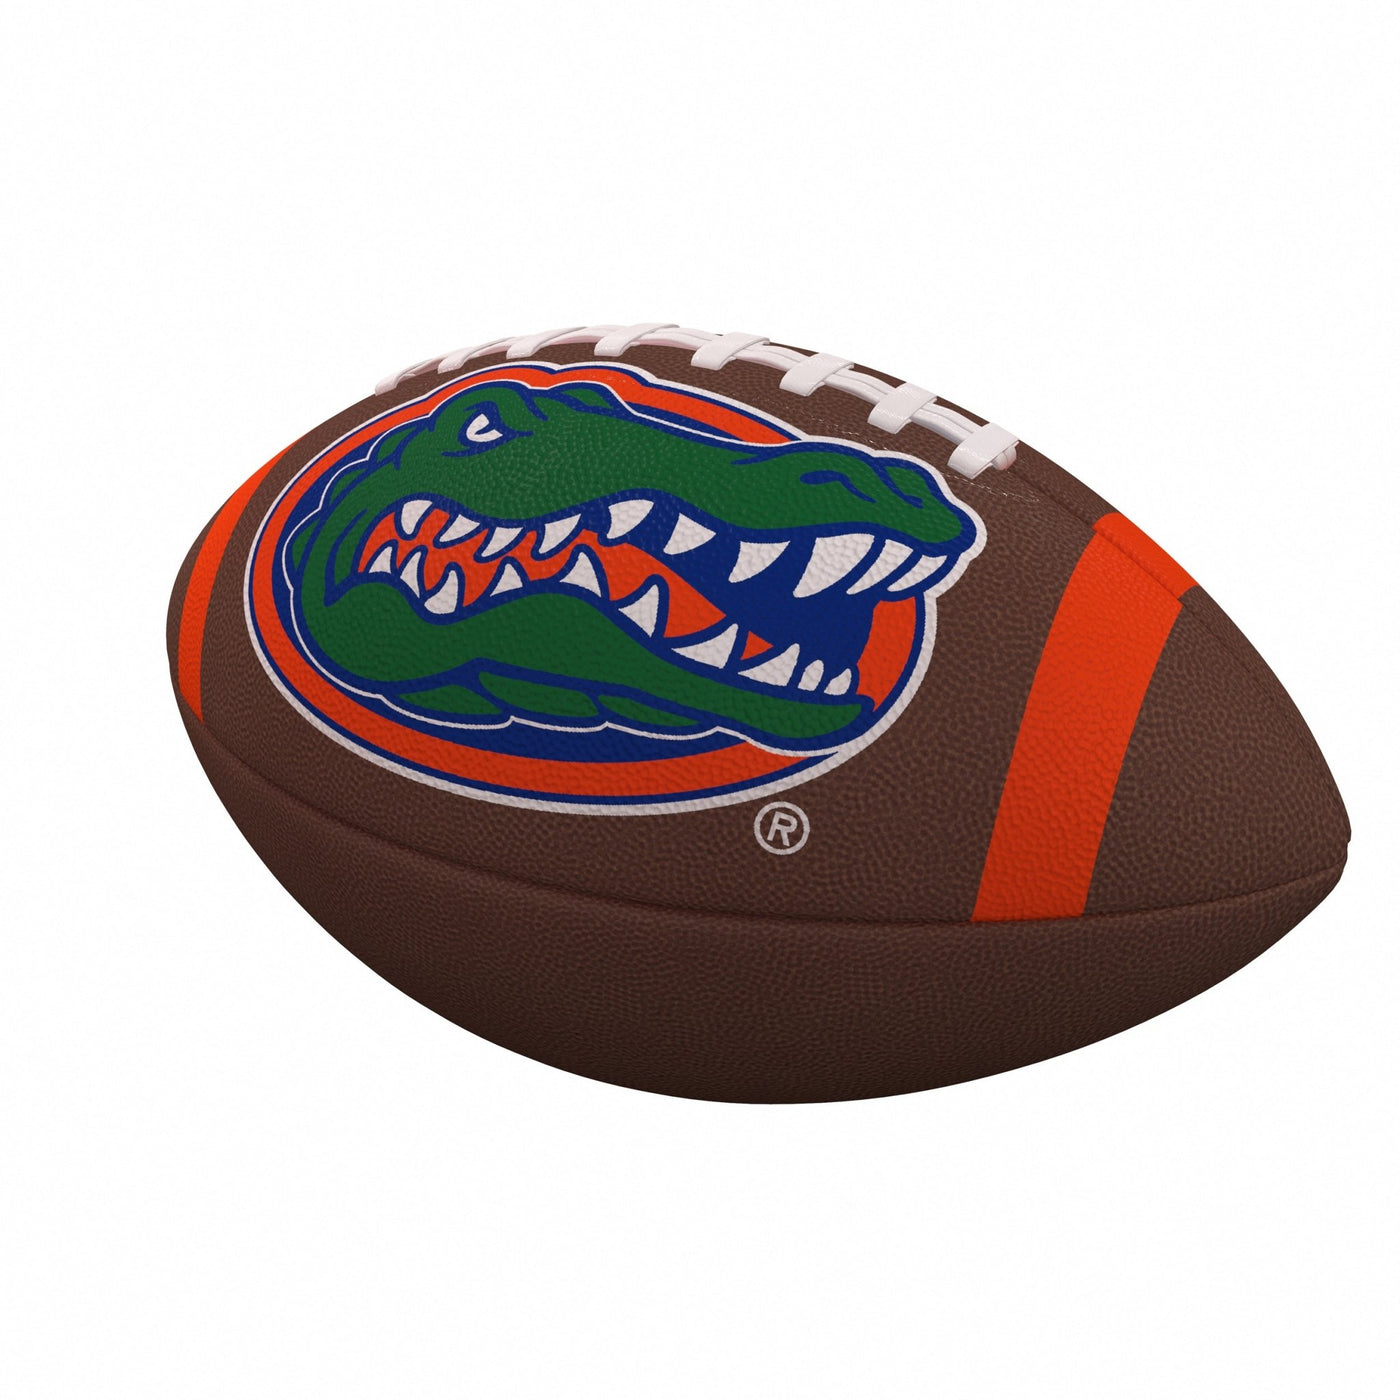 Florida Team Stripe Official-Size Composite Football - Logo Brands